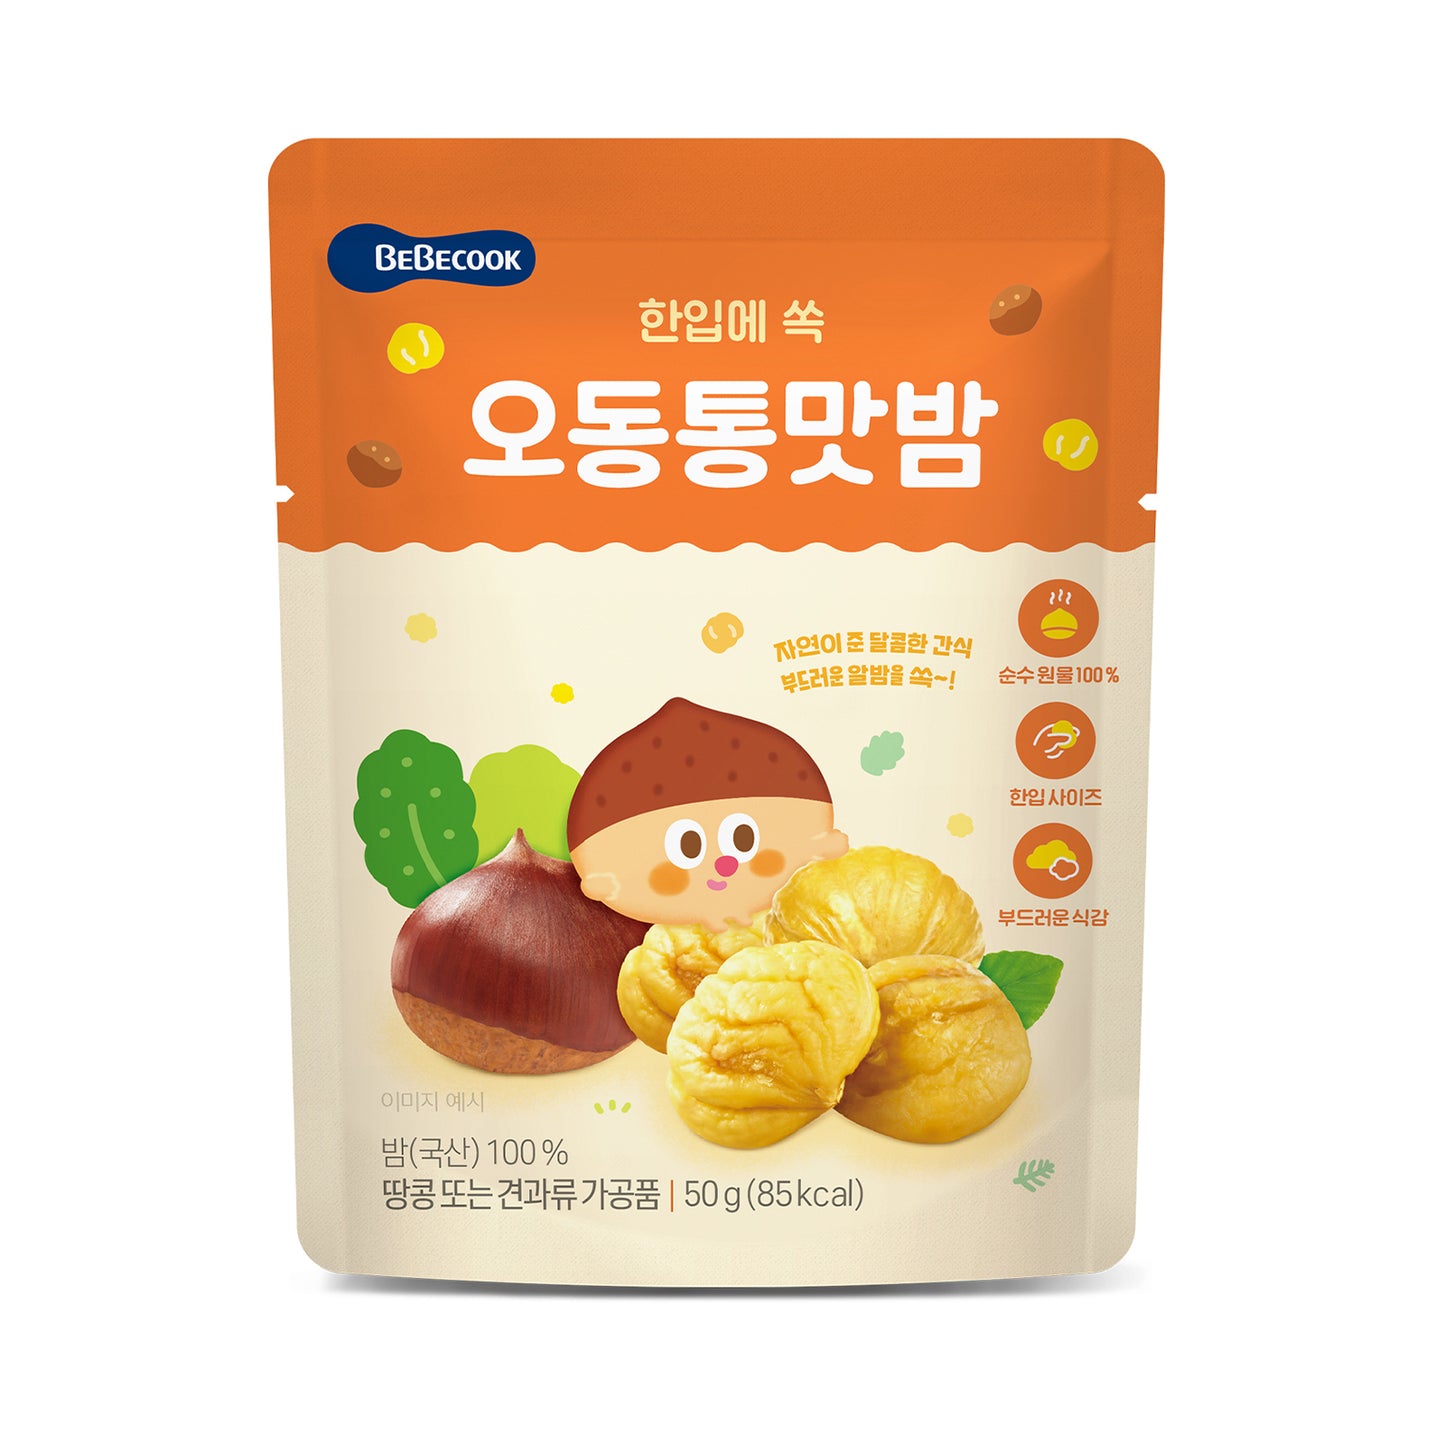 BeBecook - My First Yummy Chestnut Snack 50g